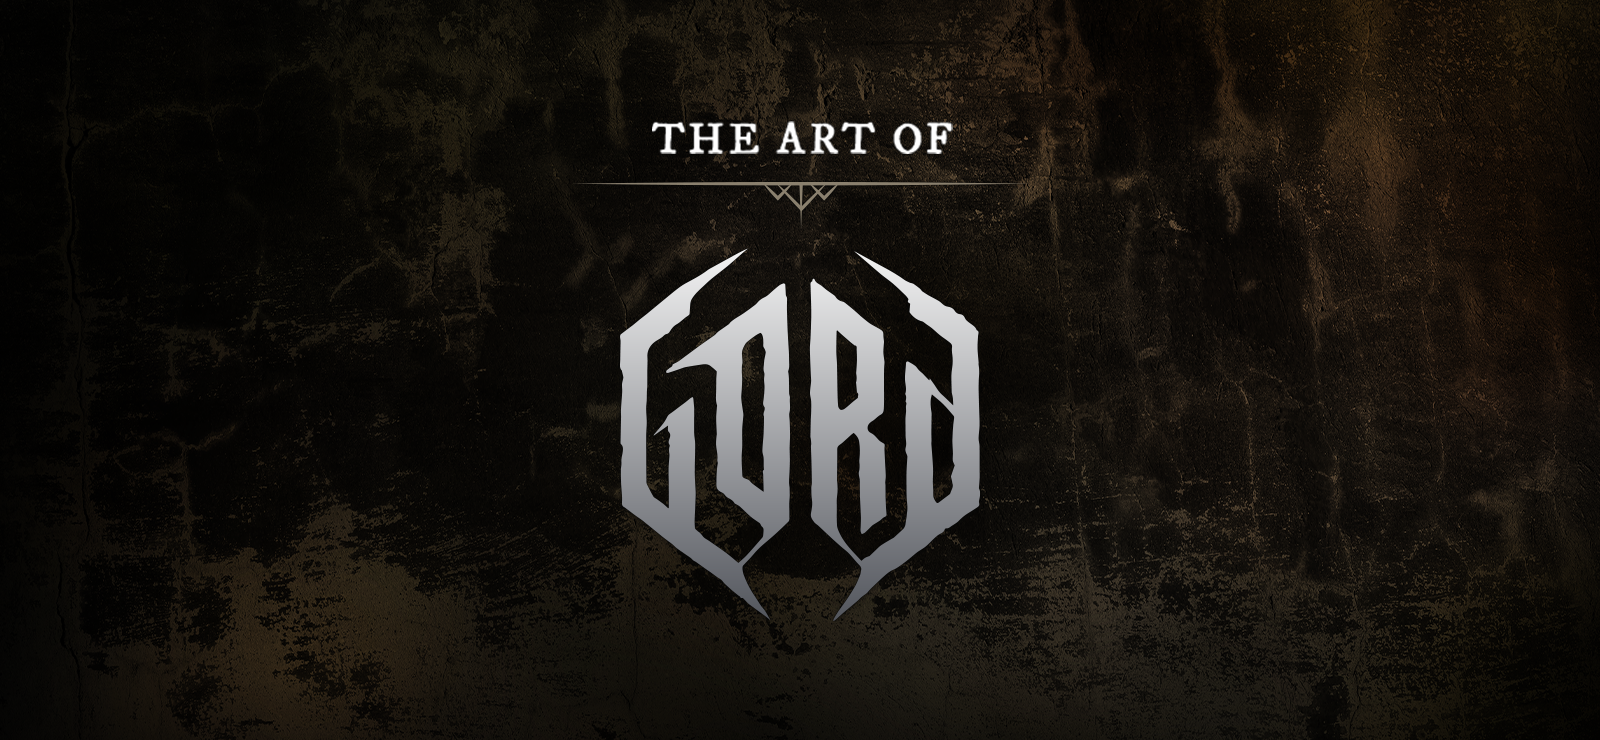 Gord - Digital Artbook